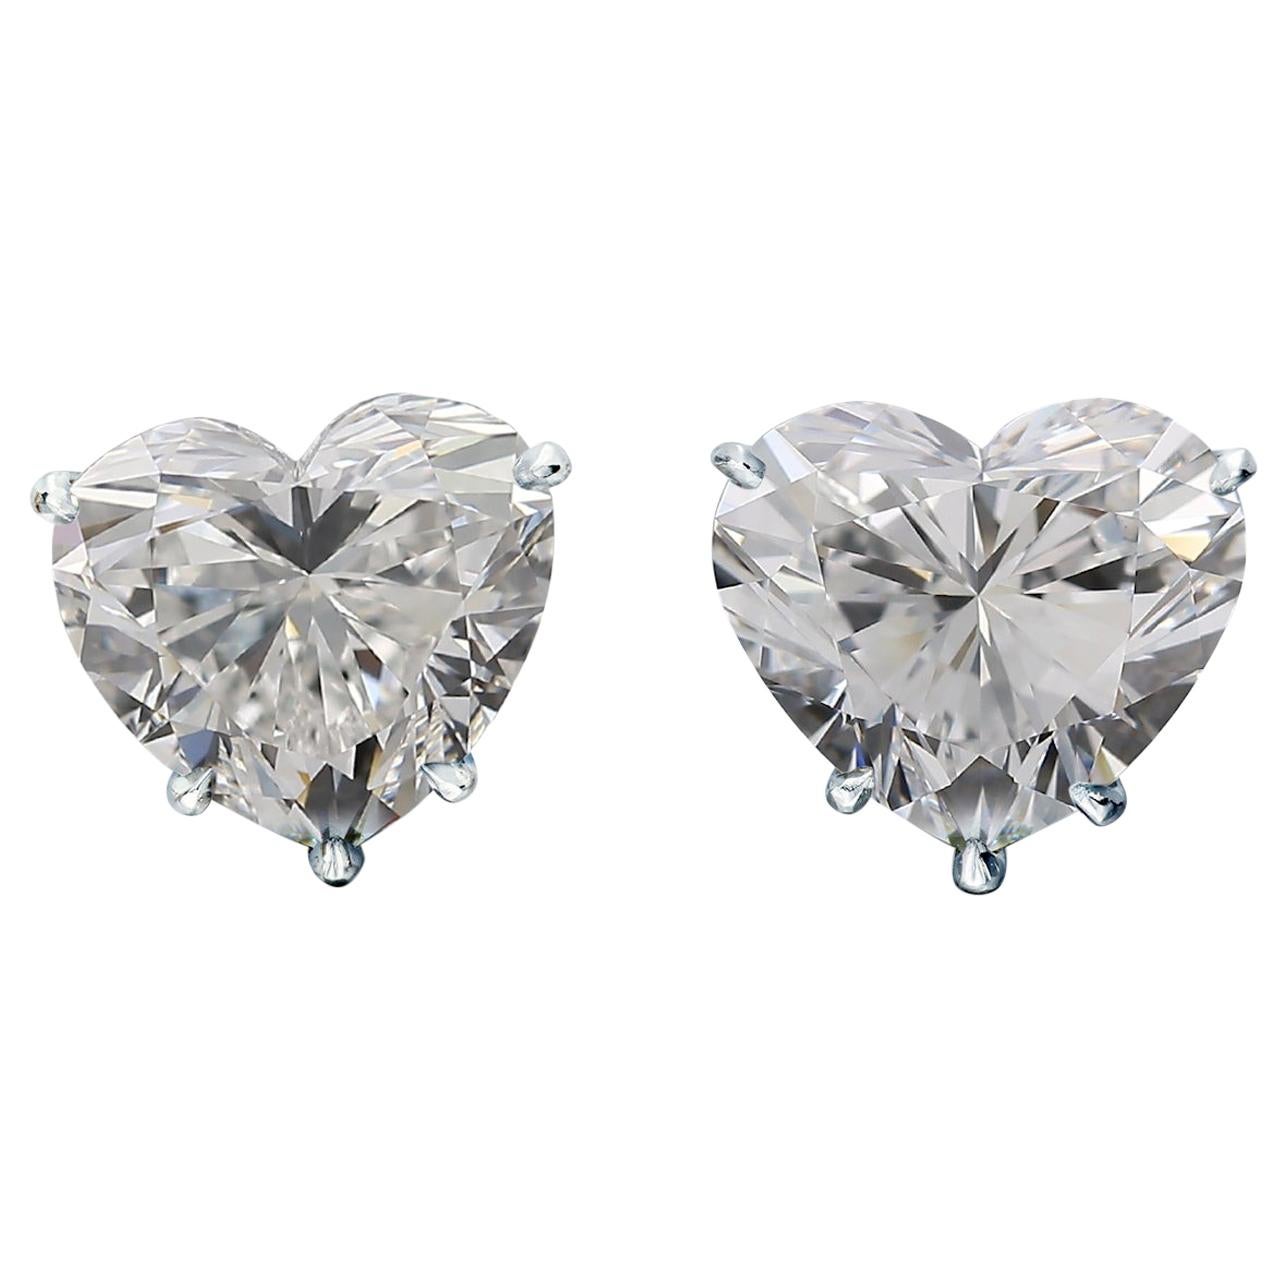 GIA Certified 2.05 Carat Heart Cut Diamond White Gold Studs Earrings